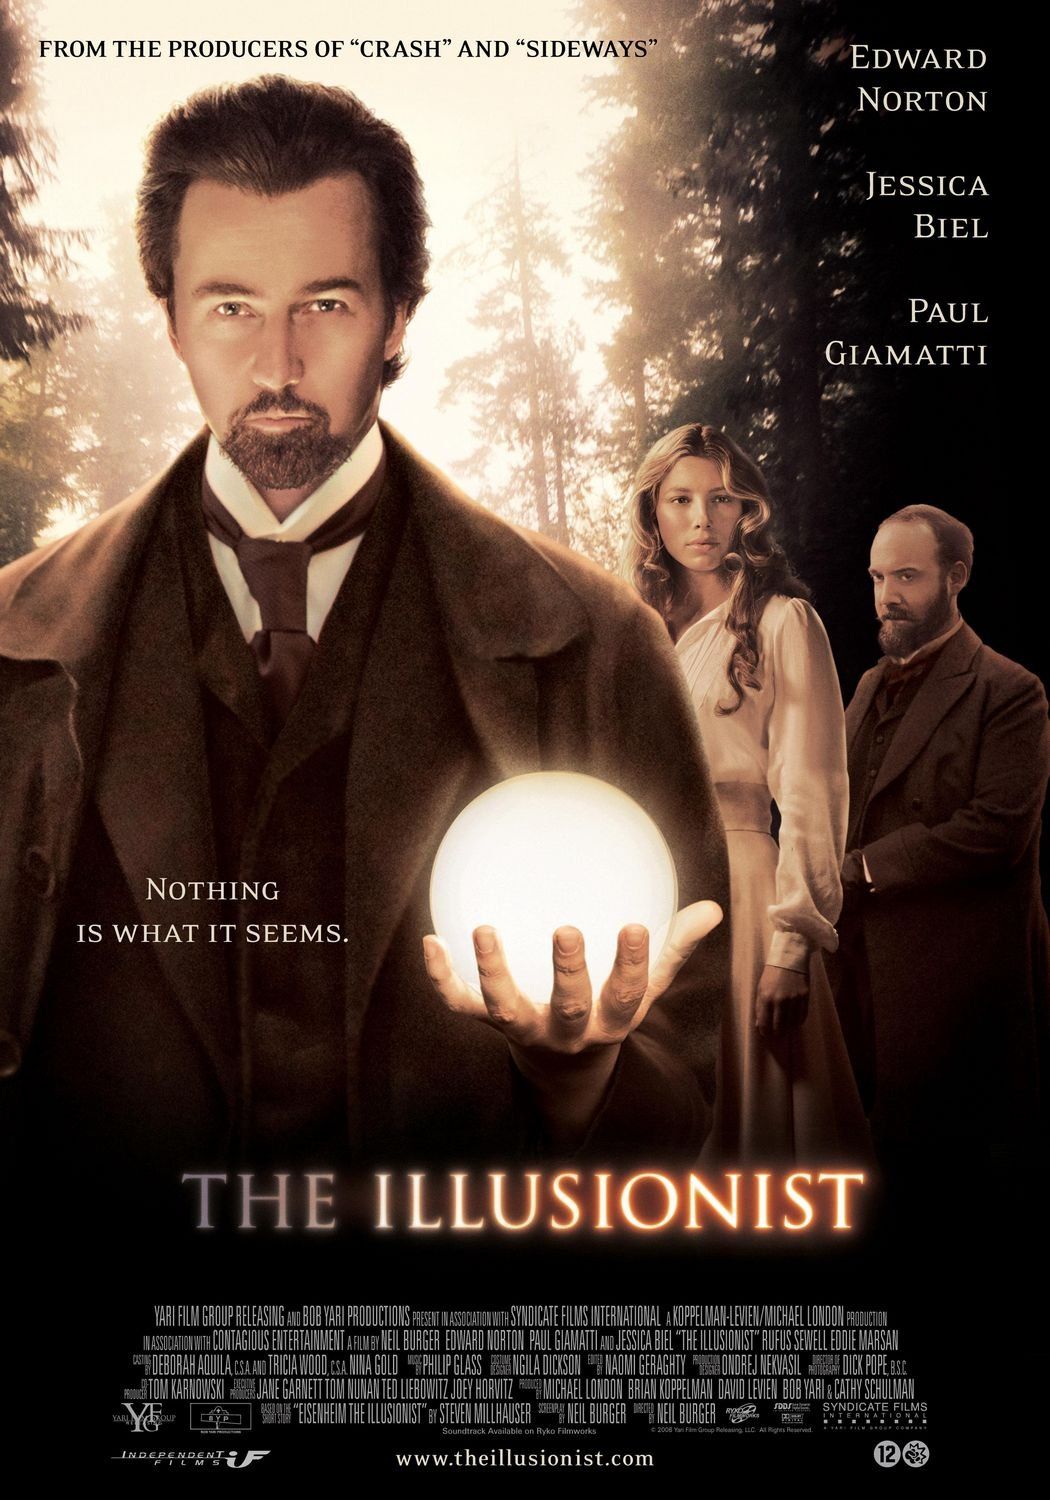 The Illusionist (2006) Hindi Dubbed Movie